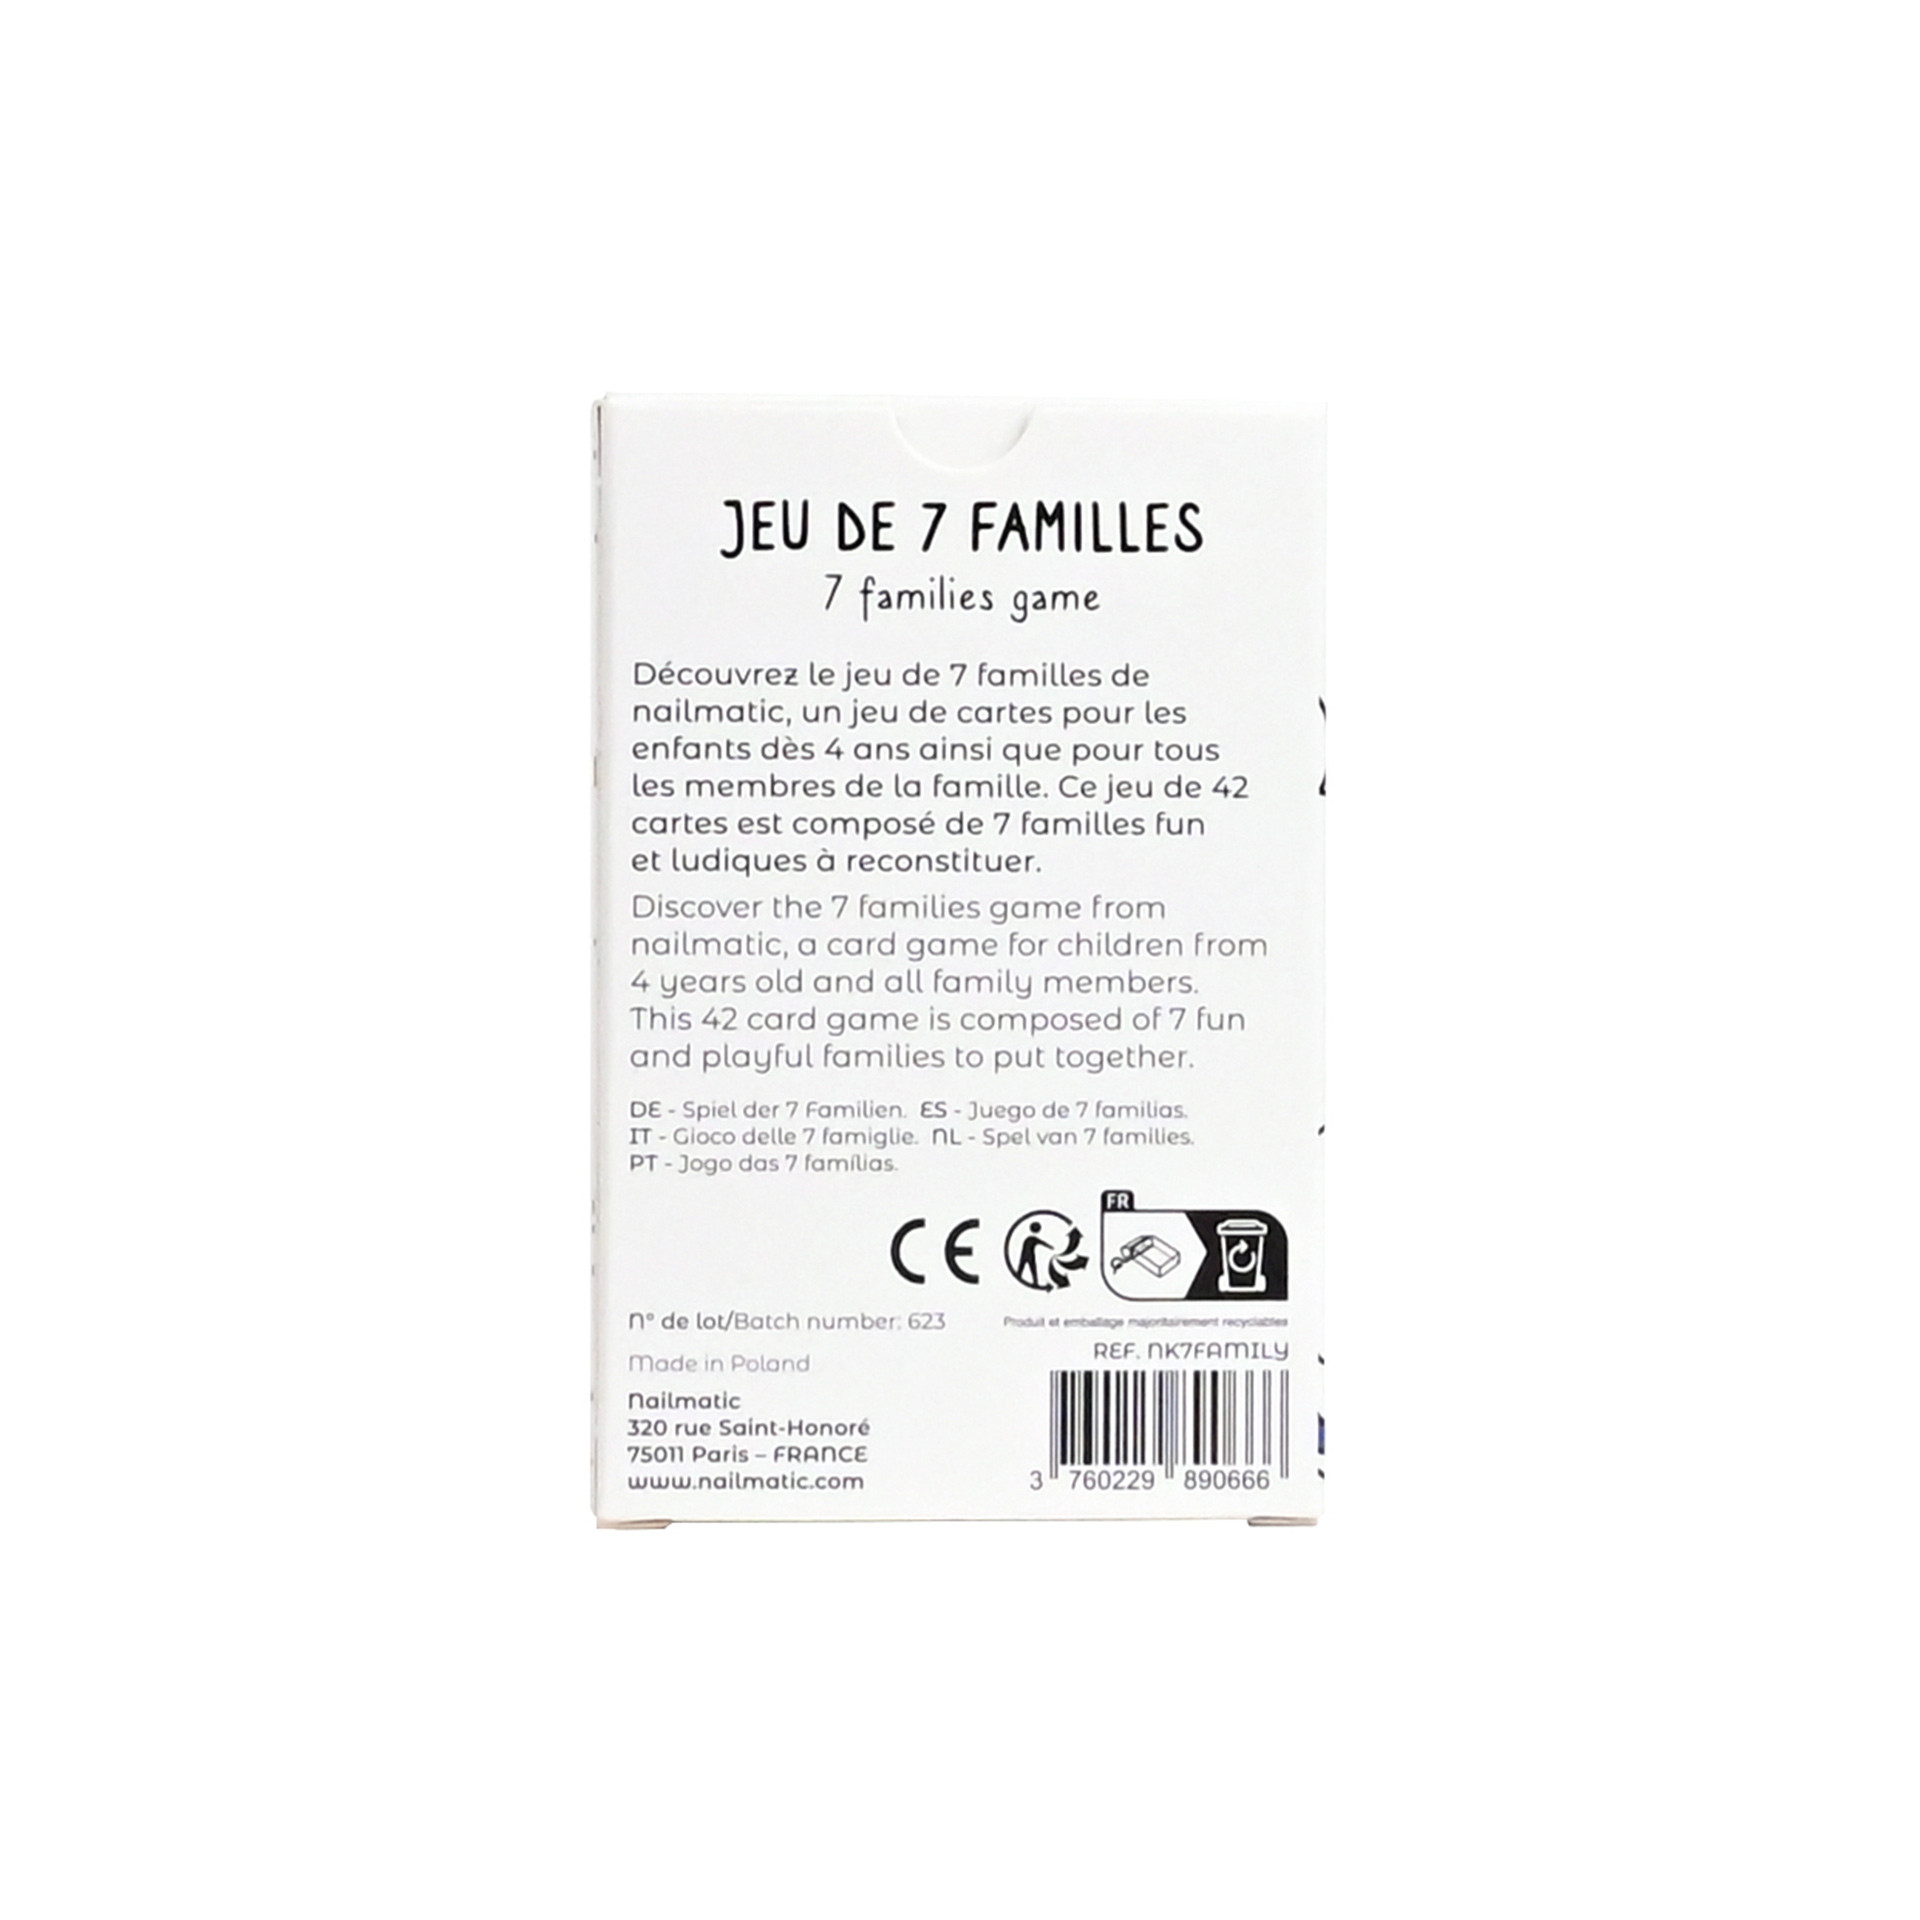 jeux de 7 familles nailmatic packaging verso